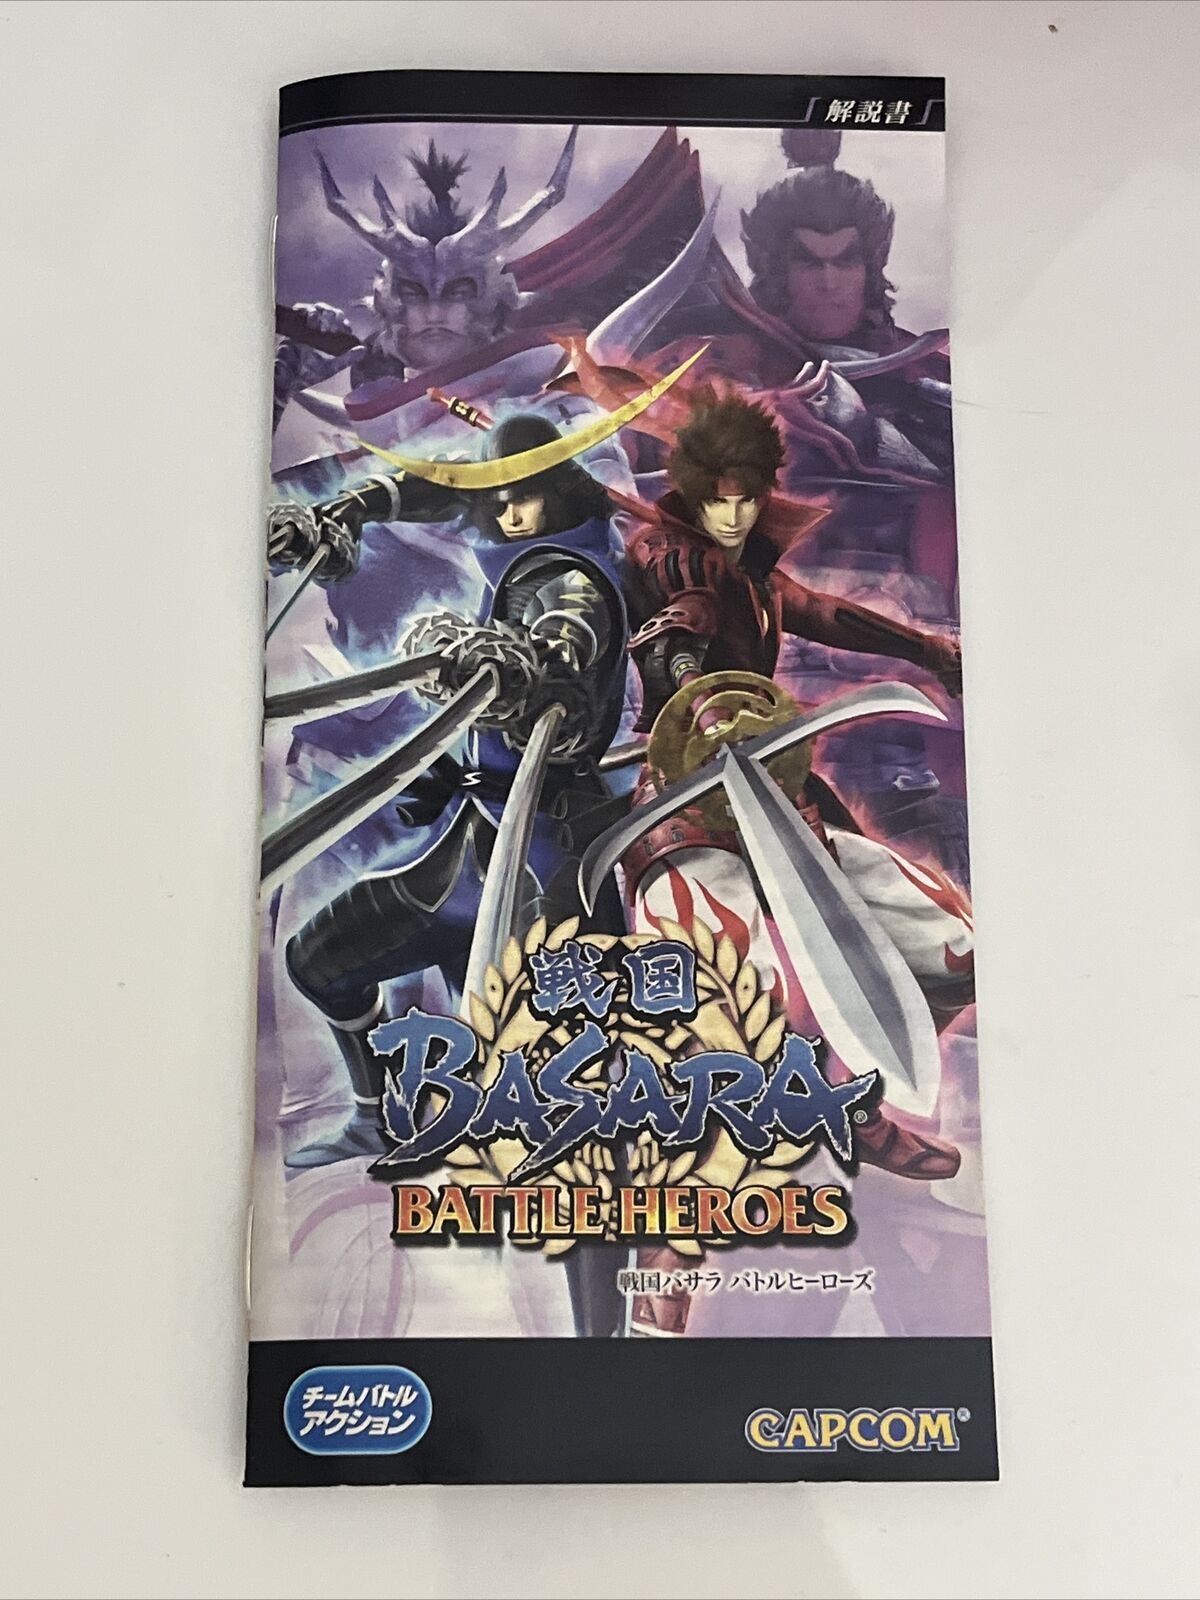 Sengoku Basara Battle Heroes + Collectible Card - Sony PSP JAPAN Game Complete